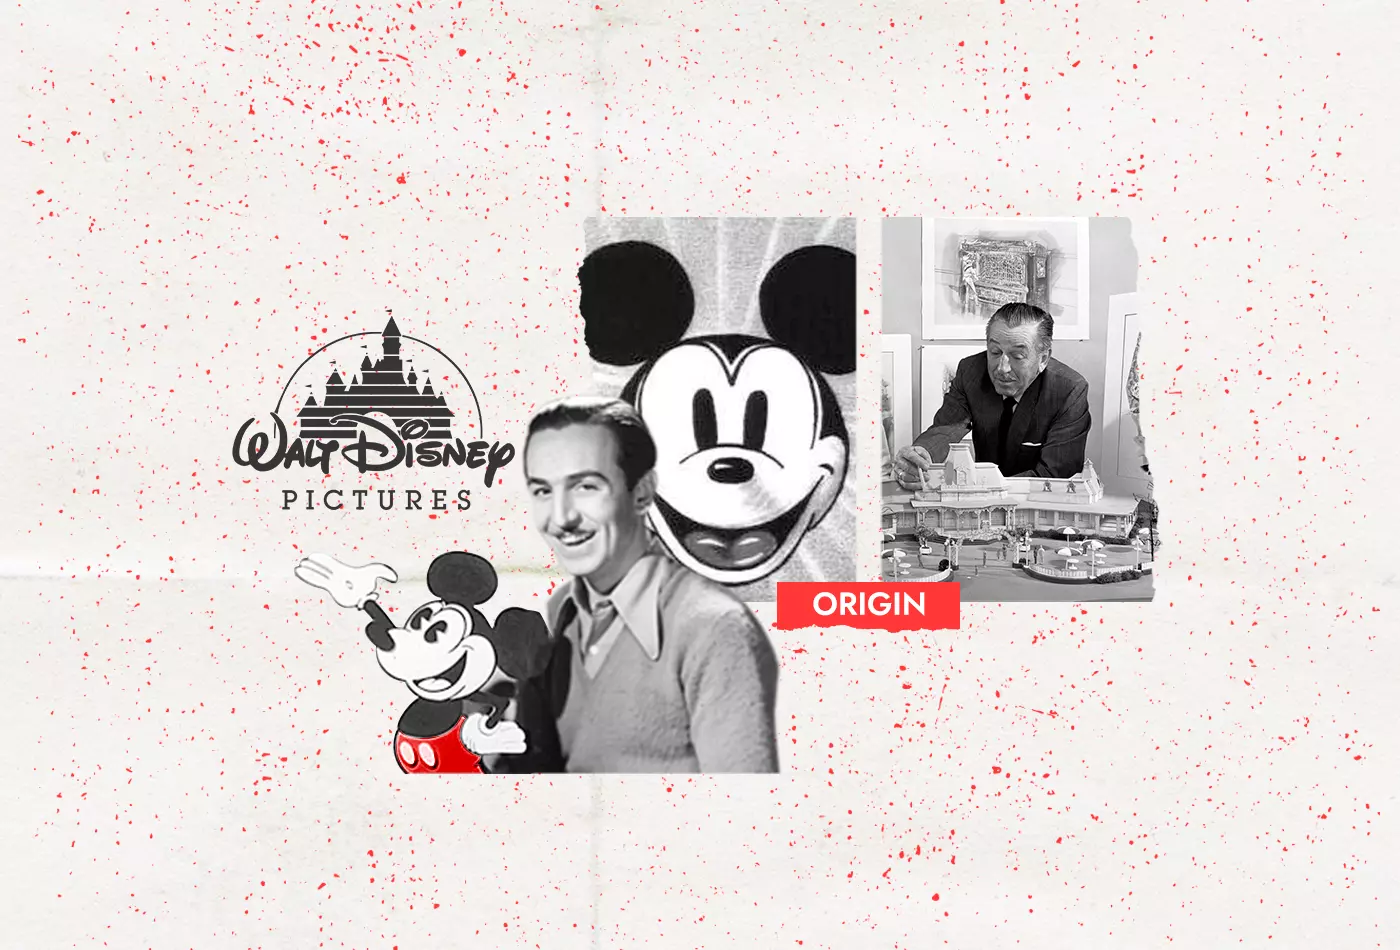 Campaigns that prove Disney is a Marketing Behemoth